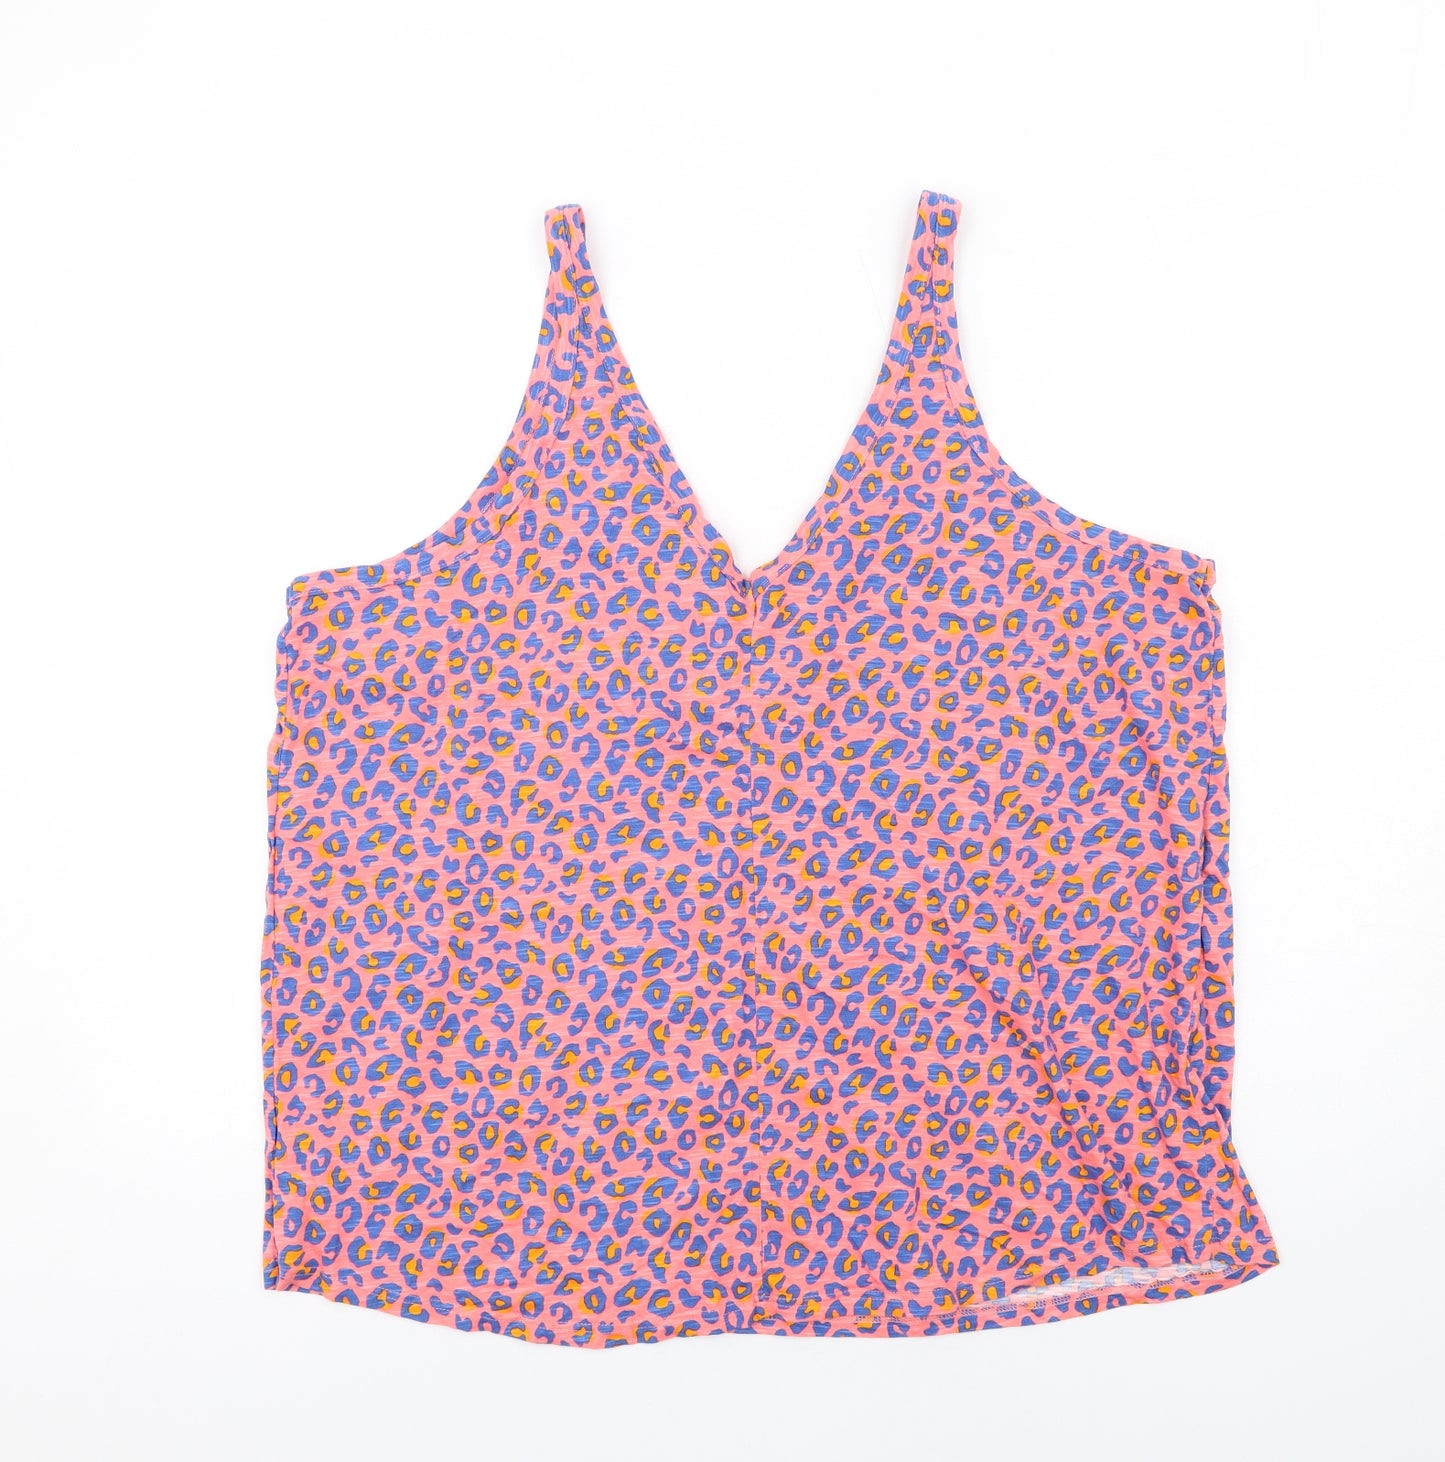 NEXT Womens Pink Animal Print Cotton Basic Tank Size 22 V-Neck - Leopard Print